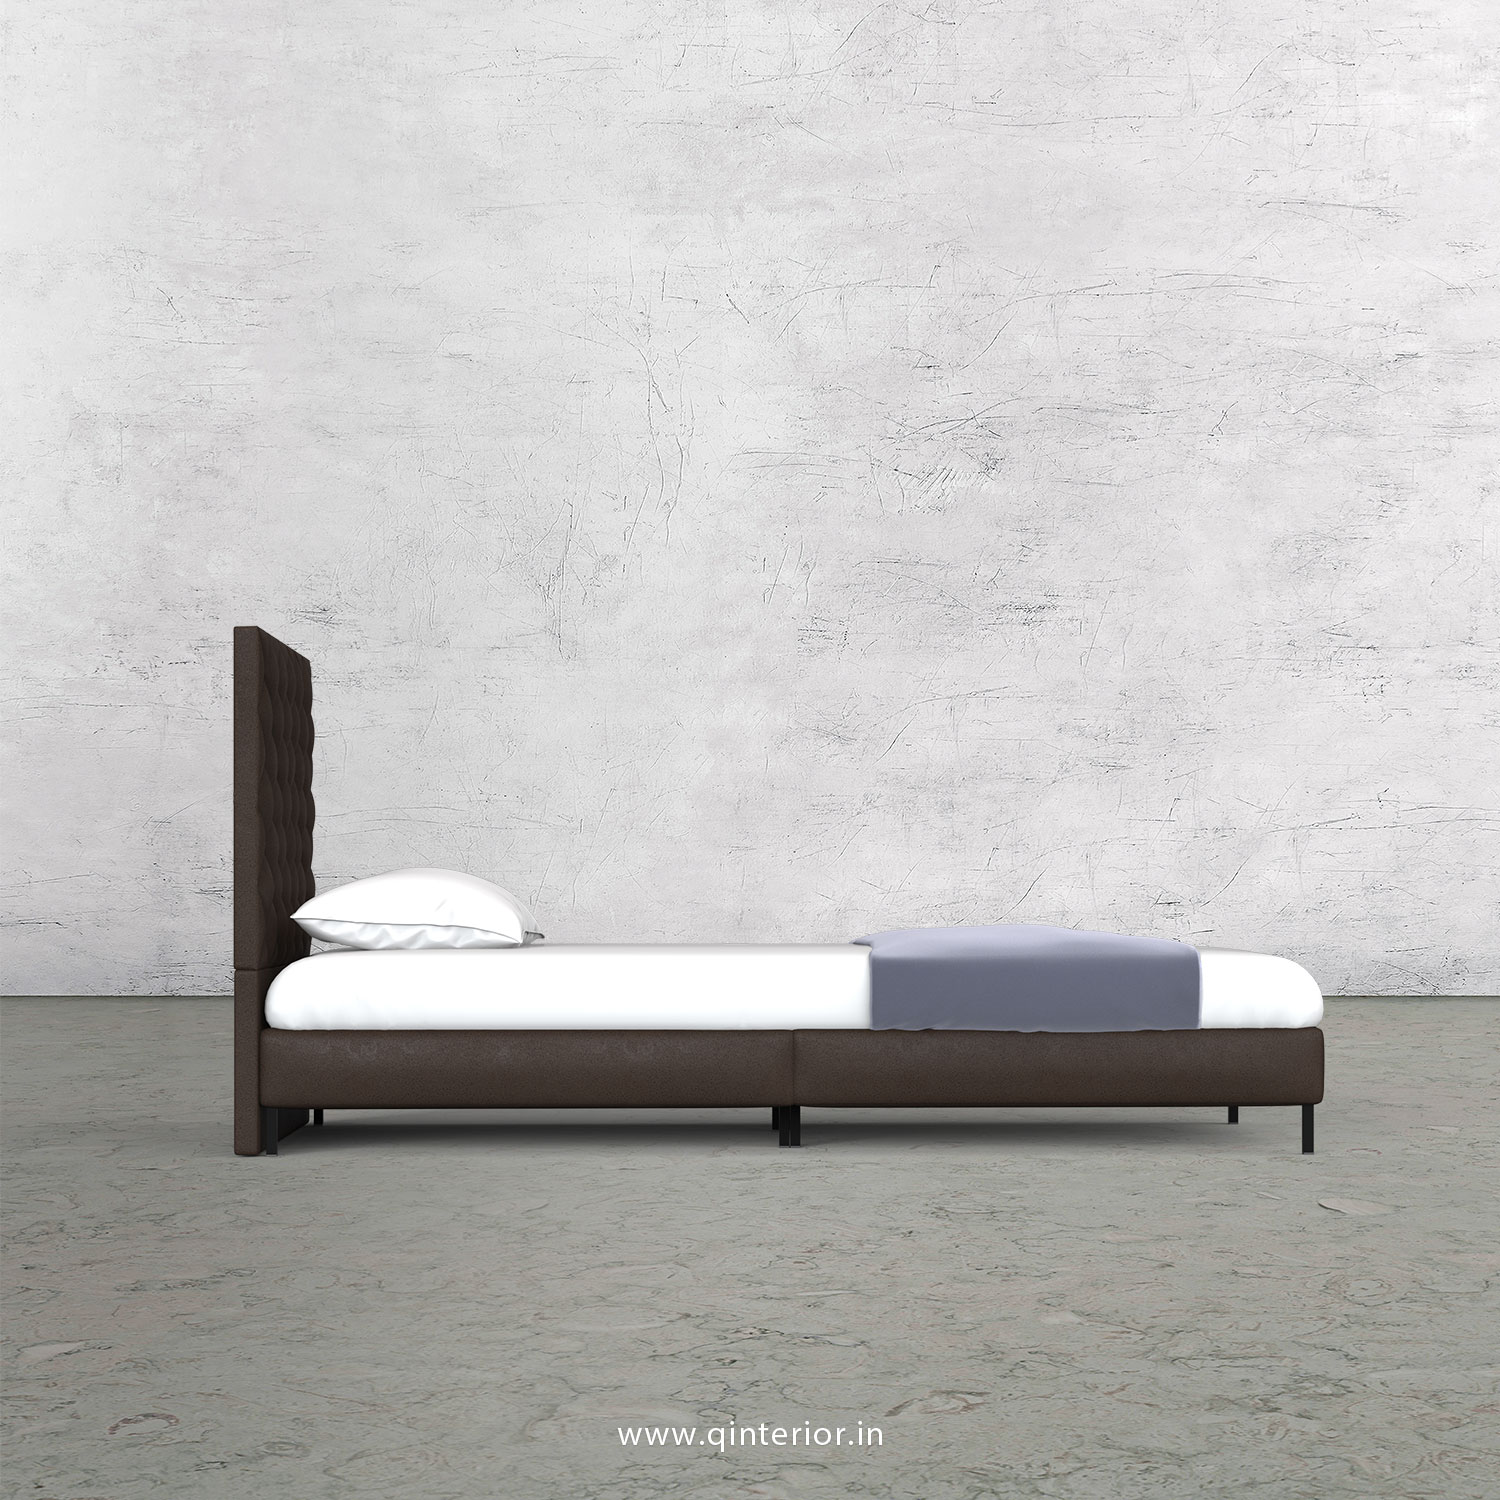 Aquila Single Bed in Fab Leather – SBD003 FL16